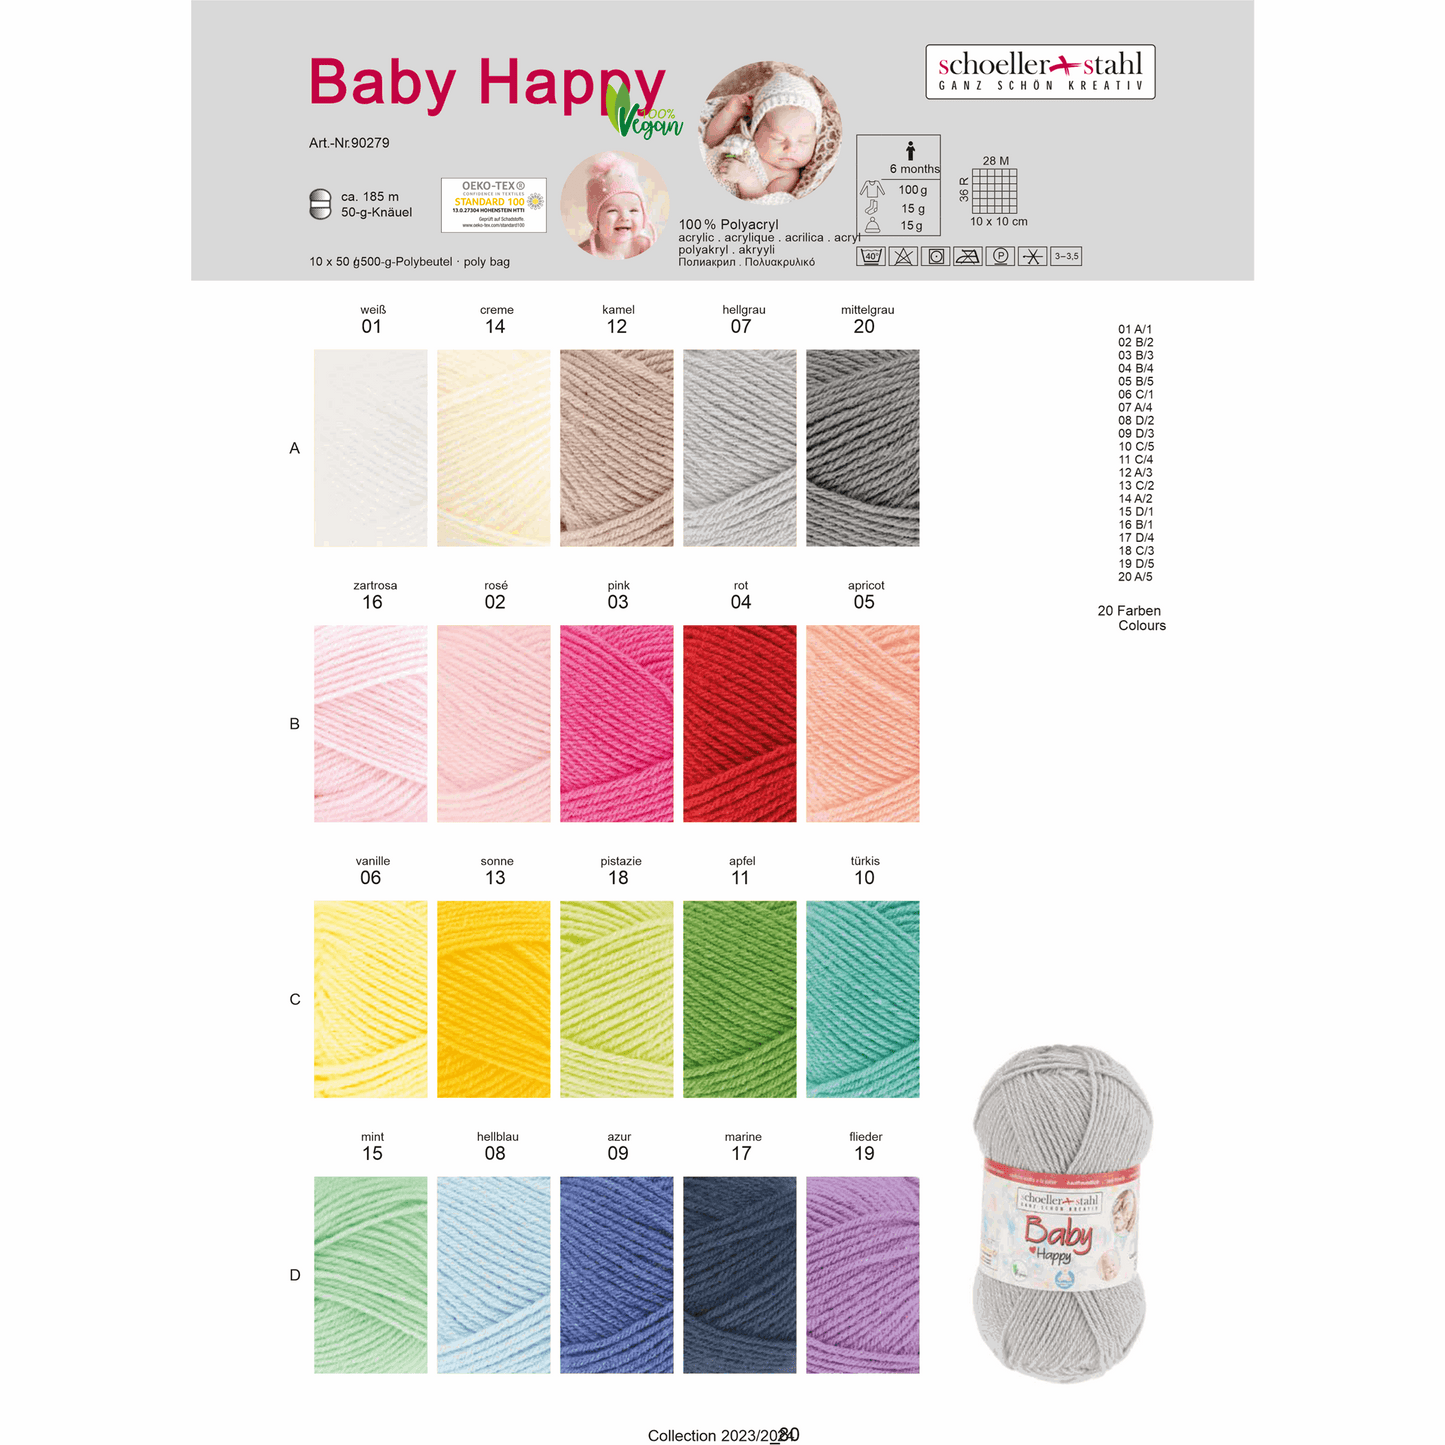 Baby happy 50g, 90279, Farbe 6, vanille